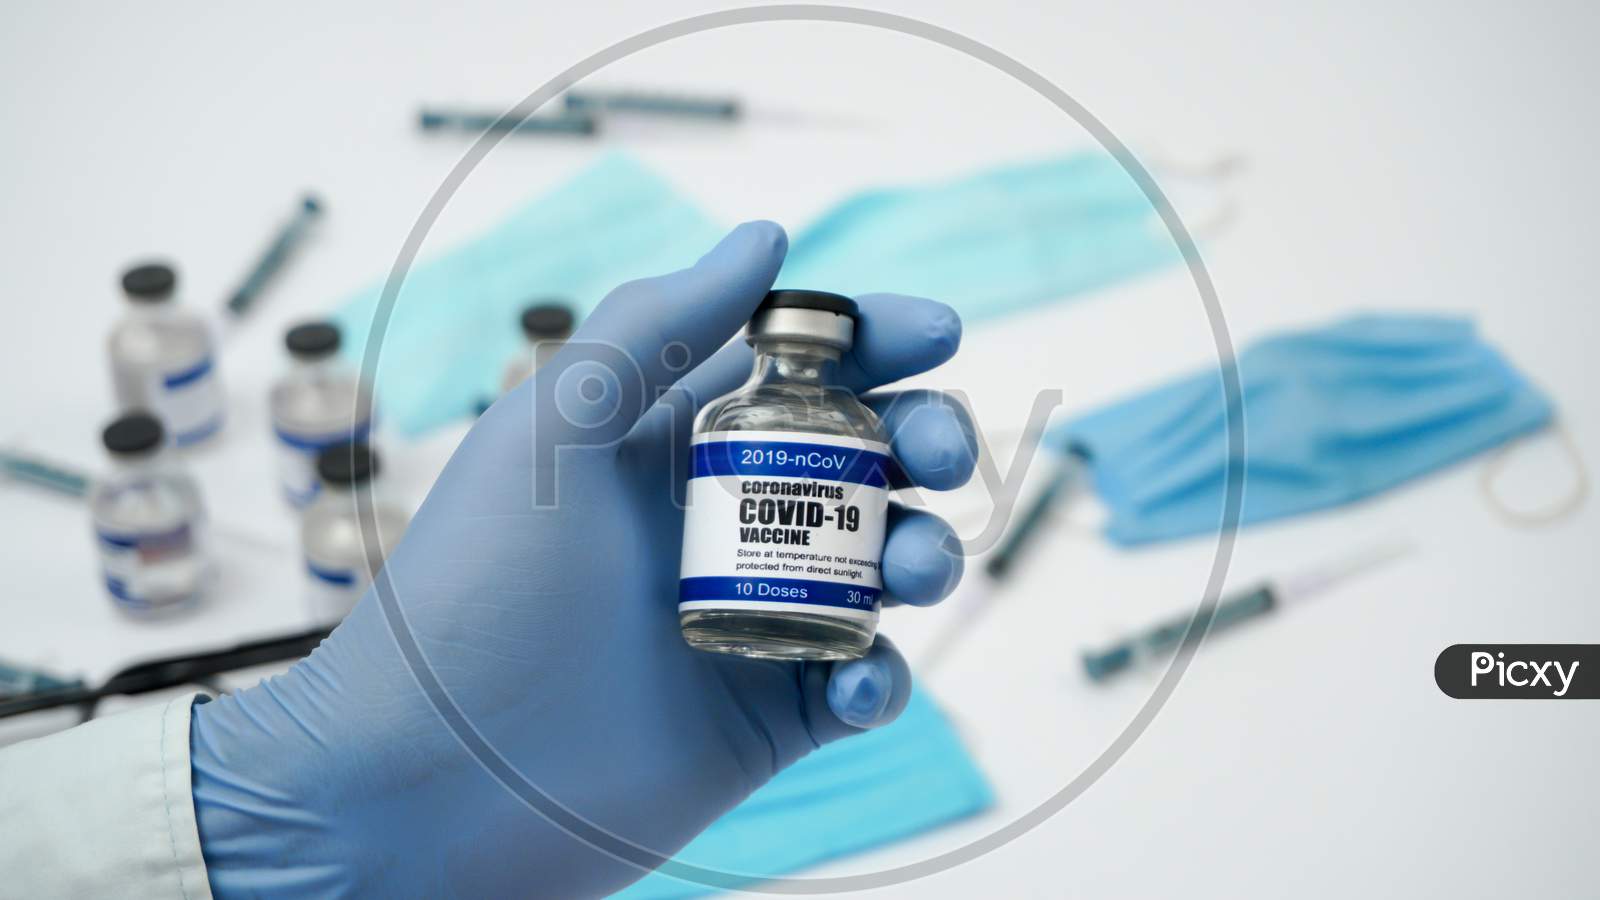 Covid-19 Corona Virus 2019-Ncov Vaccine Vials Medicine Drug Ampoule Bottle Closeup Syringe Injection Medical Nitrile Gloves Mask Glasses. Vaccination, Treatment To Cure Covid 19 Corona Virus Infection